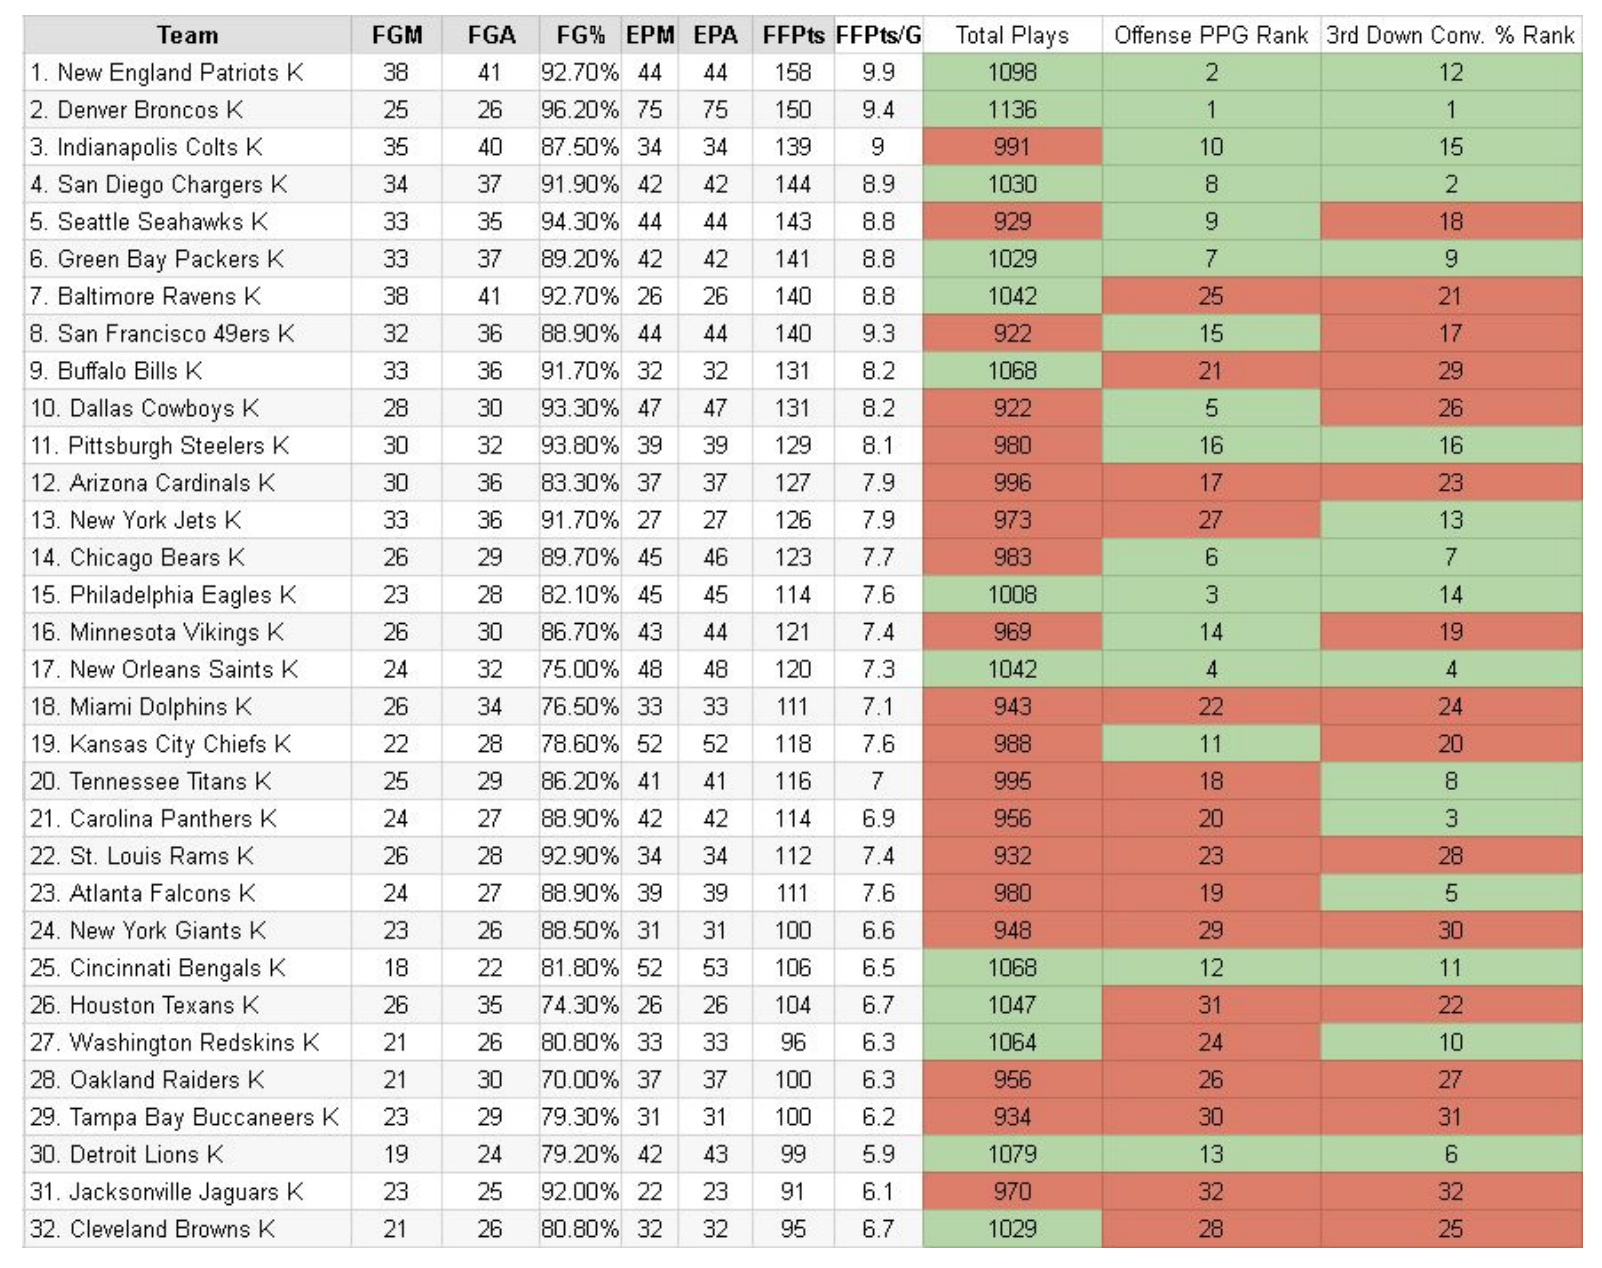 2013 season ranking information